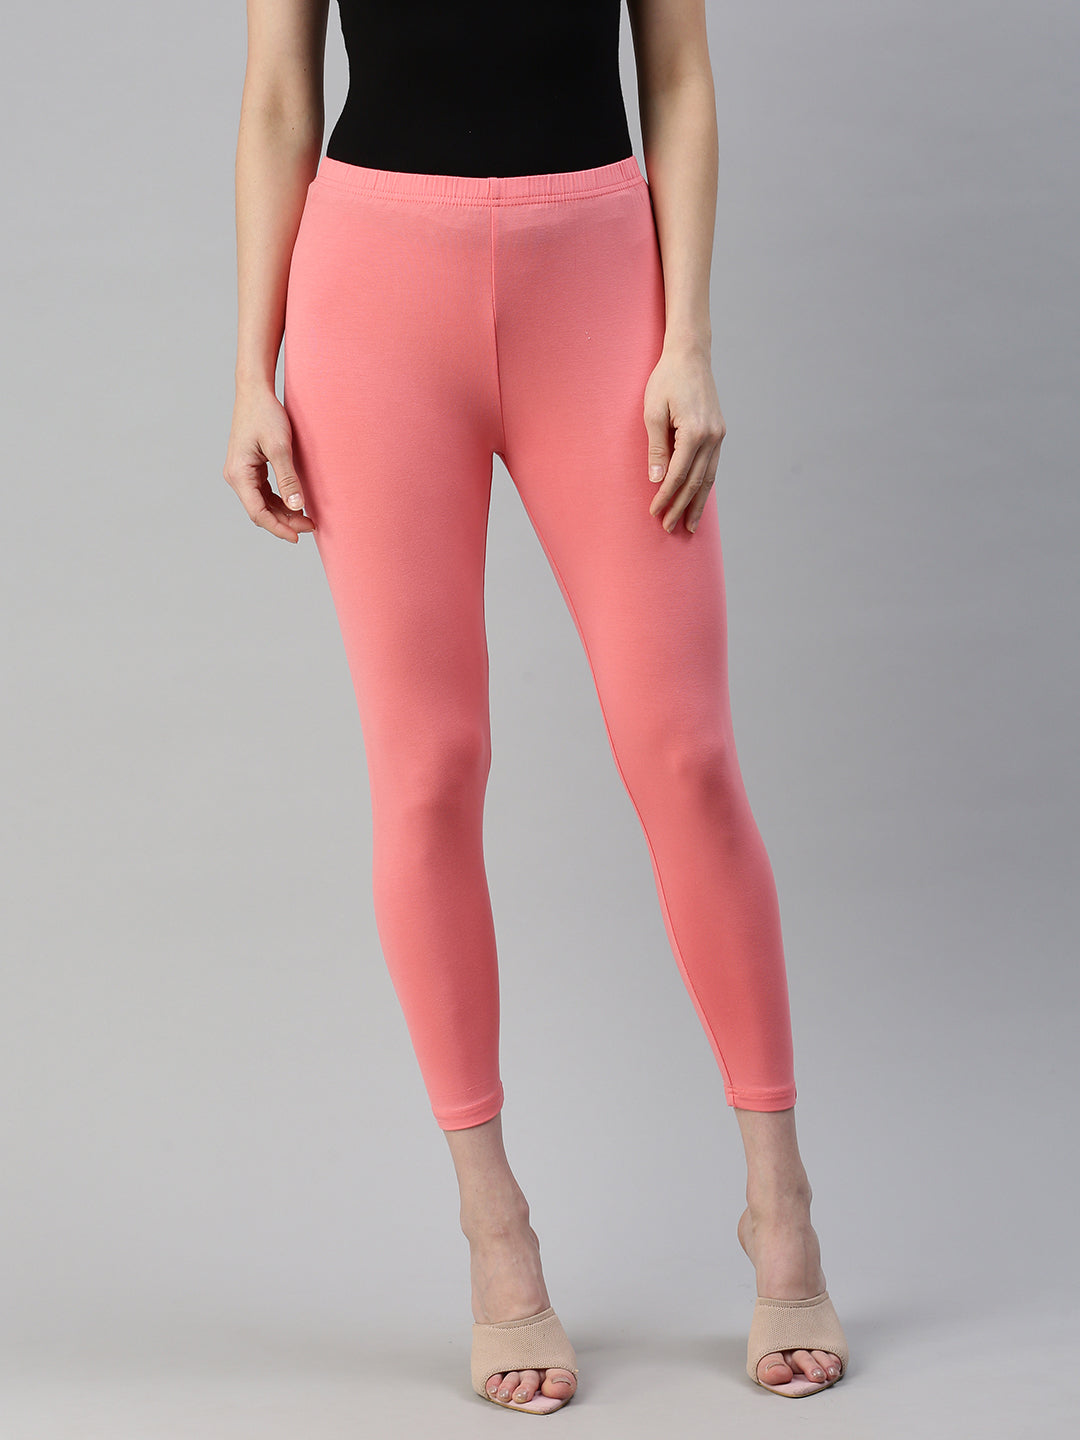 Shop Prisma's Peach Cuff Length Leggings for Women